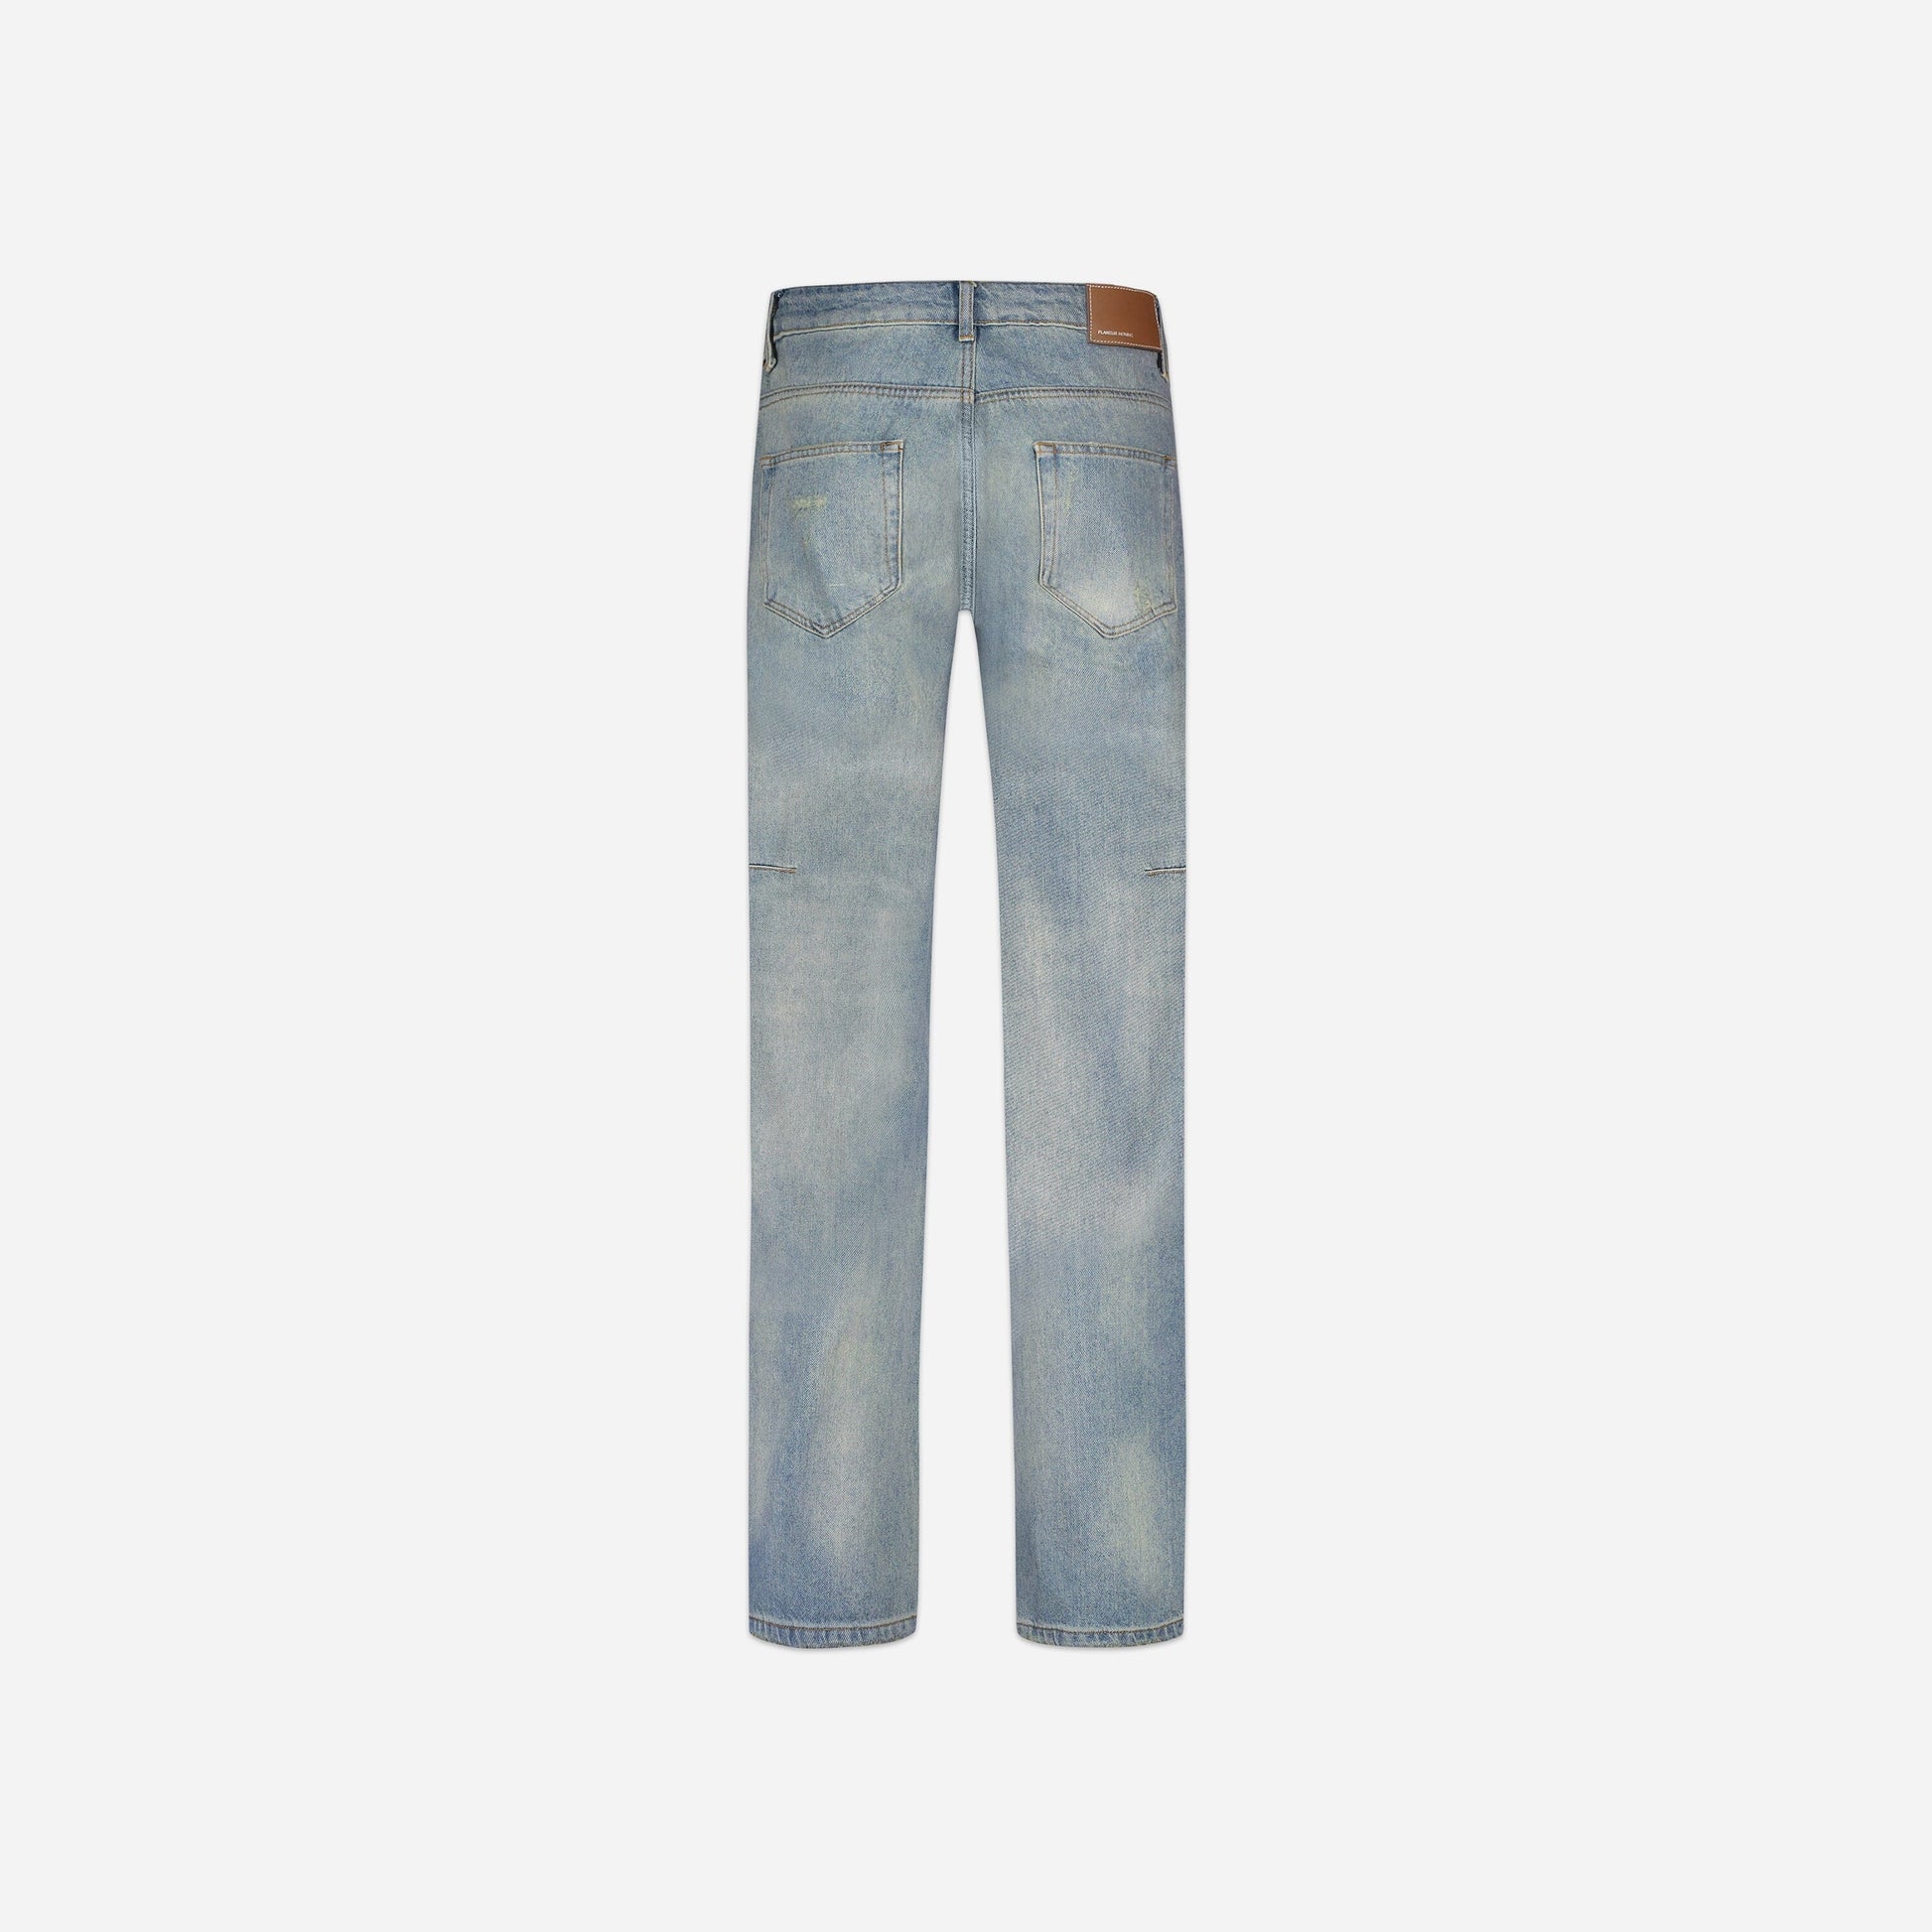 Distressed Straight Jeans in Light Blue Denim